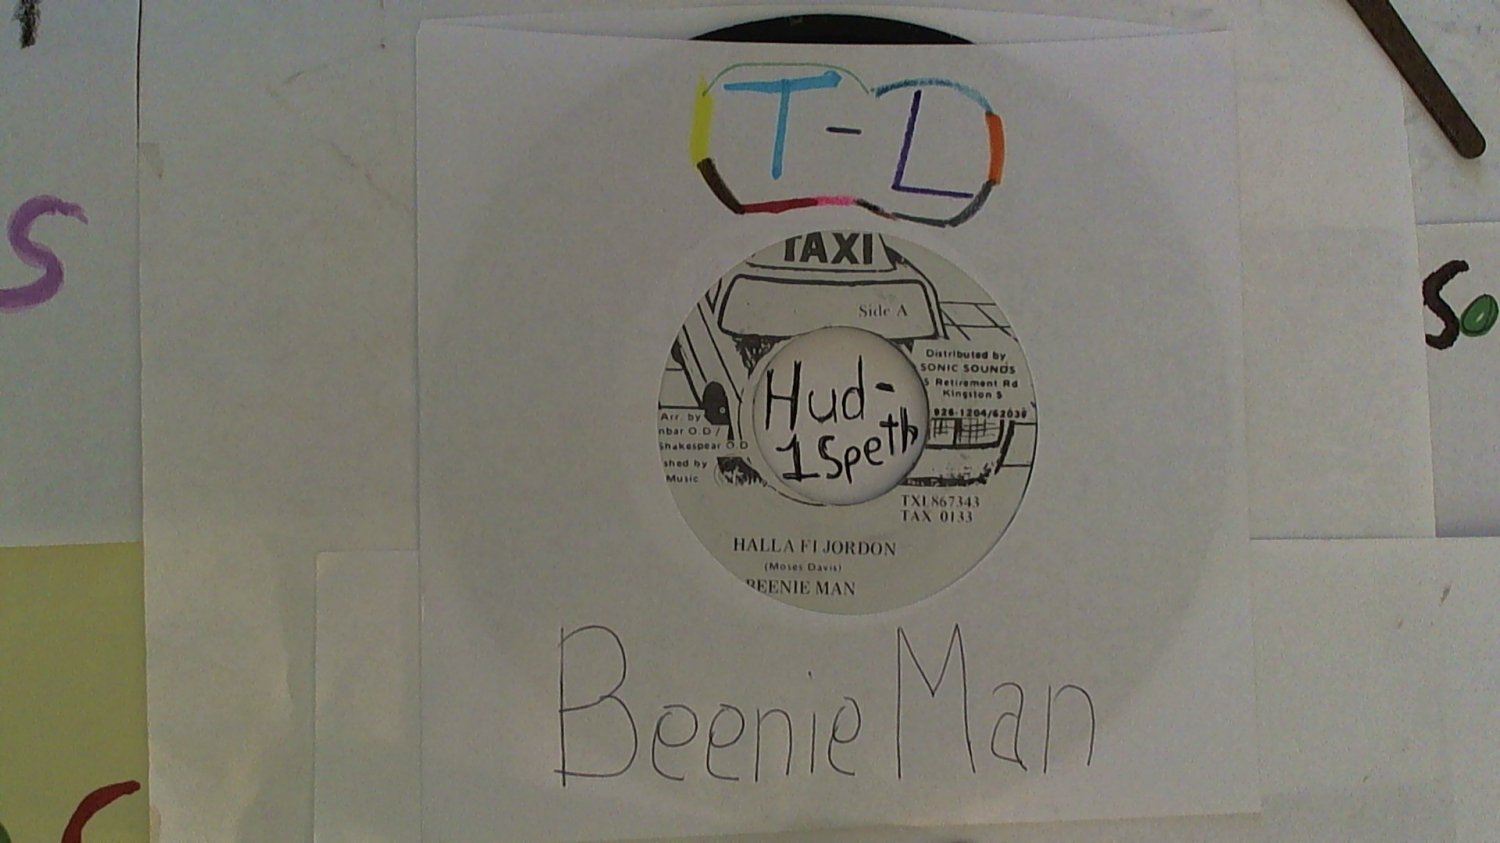 artiste: Beenie Man side A: Halla Fi Jordan / side B: Version label: Taxi (Used) 7"